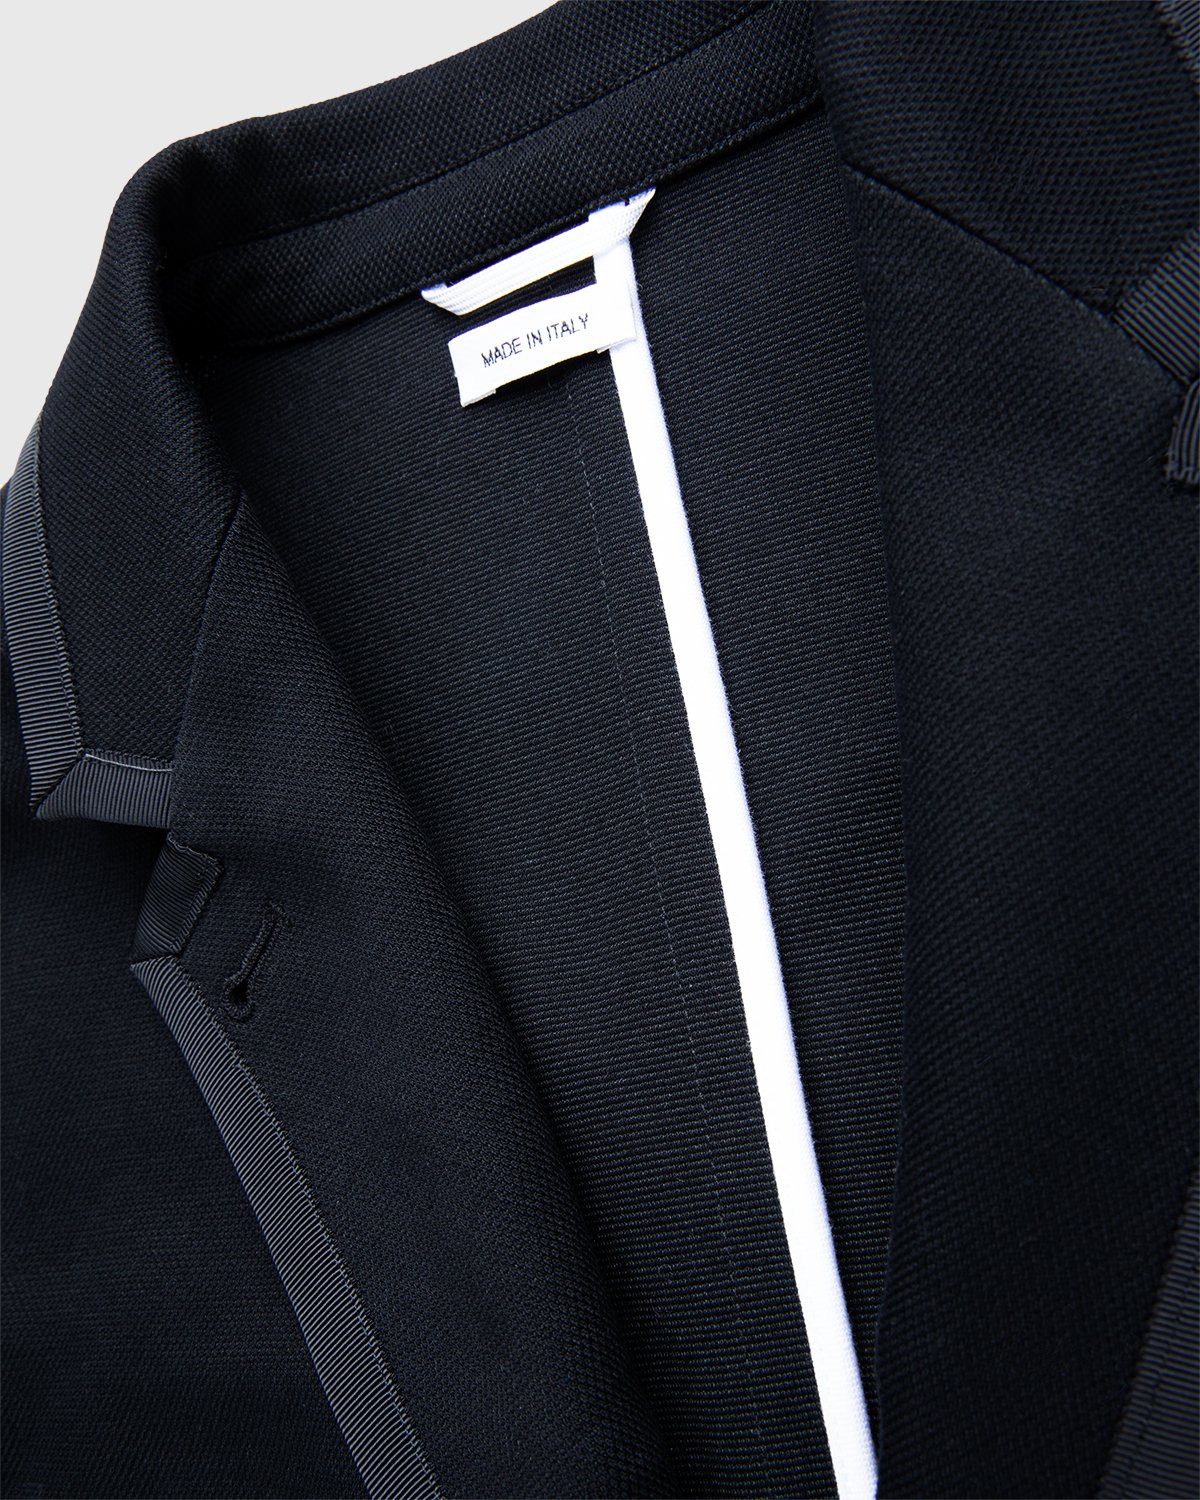 Thom Browne x Highsnobiety - Women’s Deconstructed Sport Jacket Black - Clothing - Black - Image 3